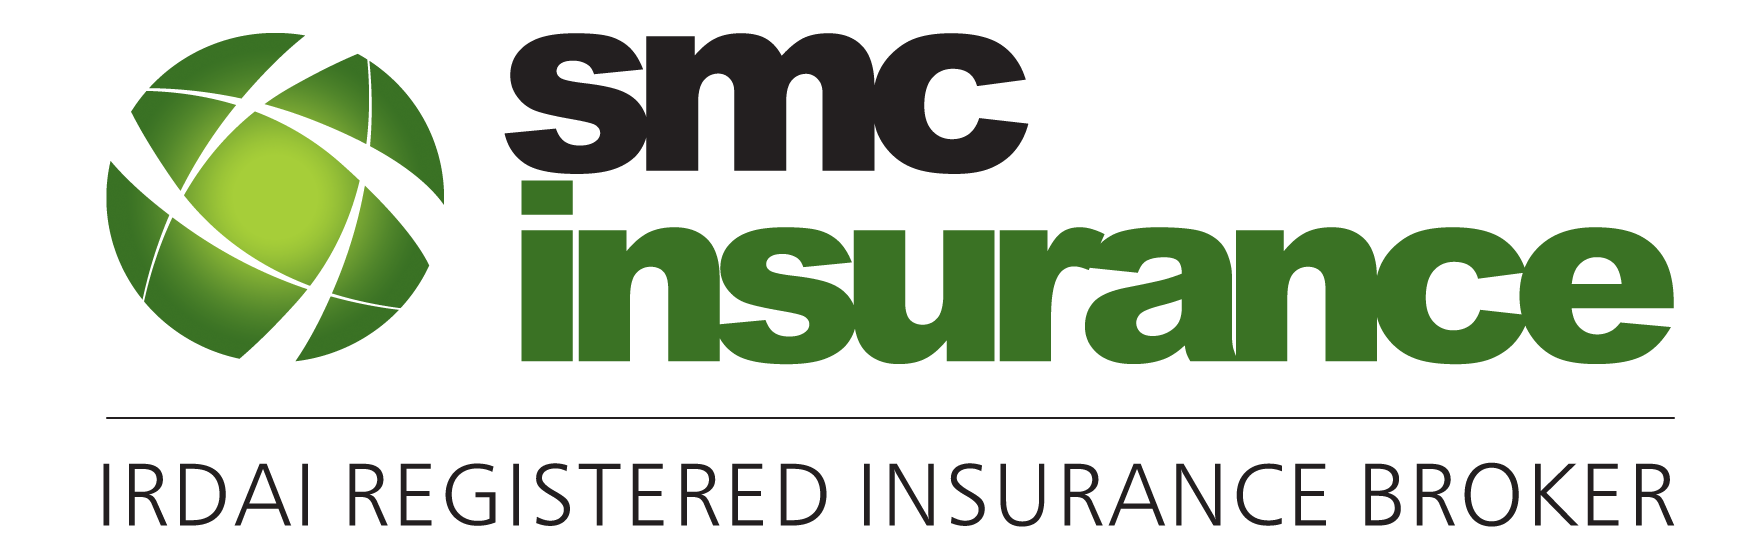 SMC Insurance LOGO